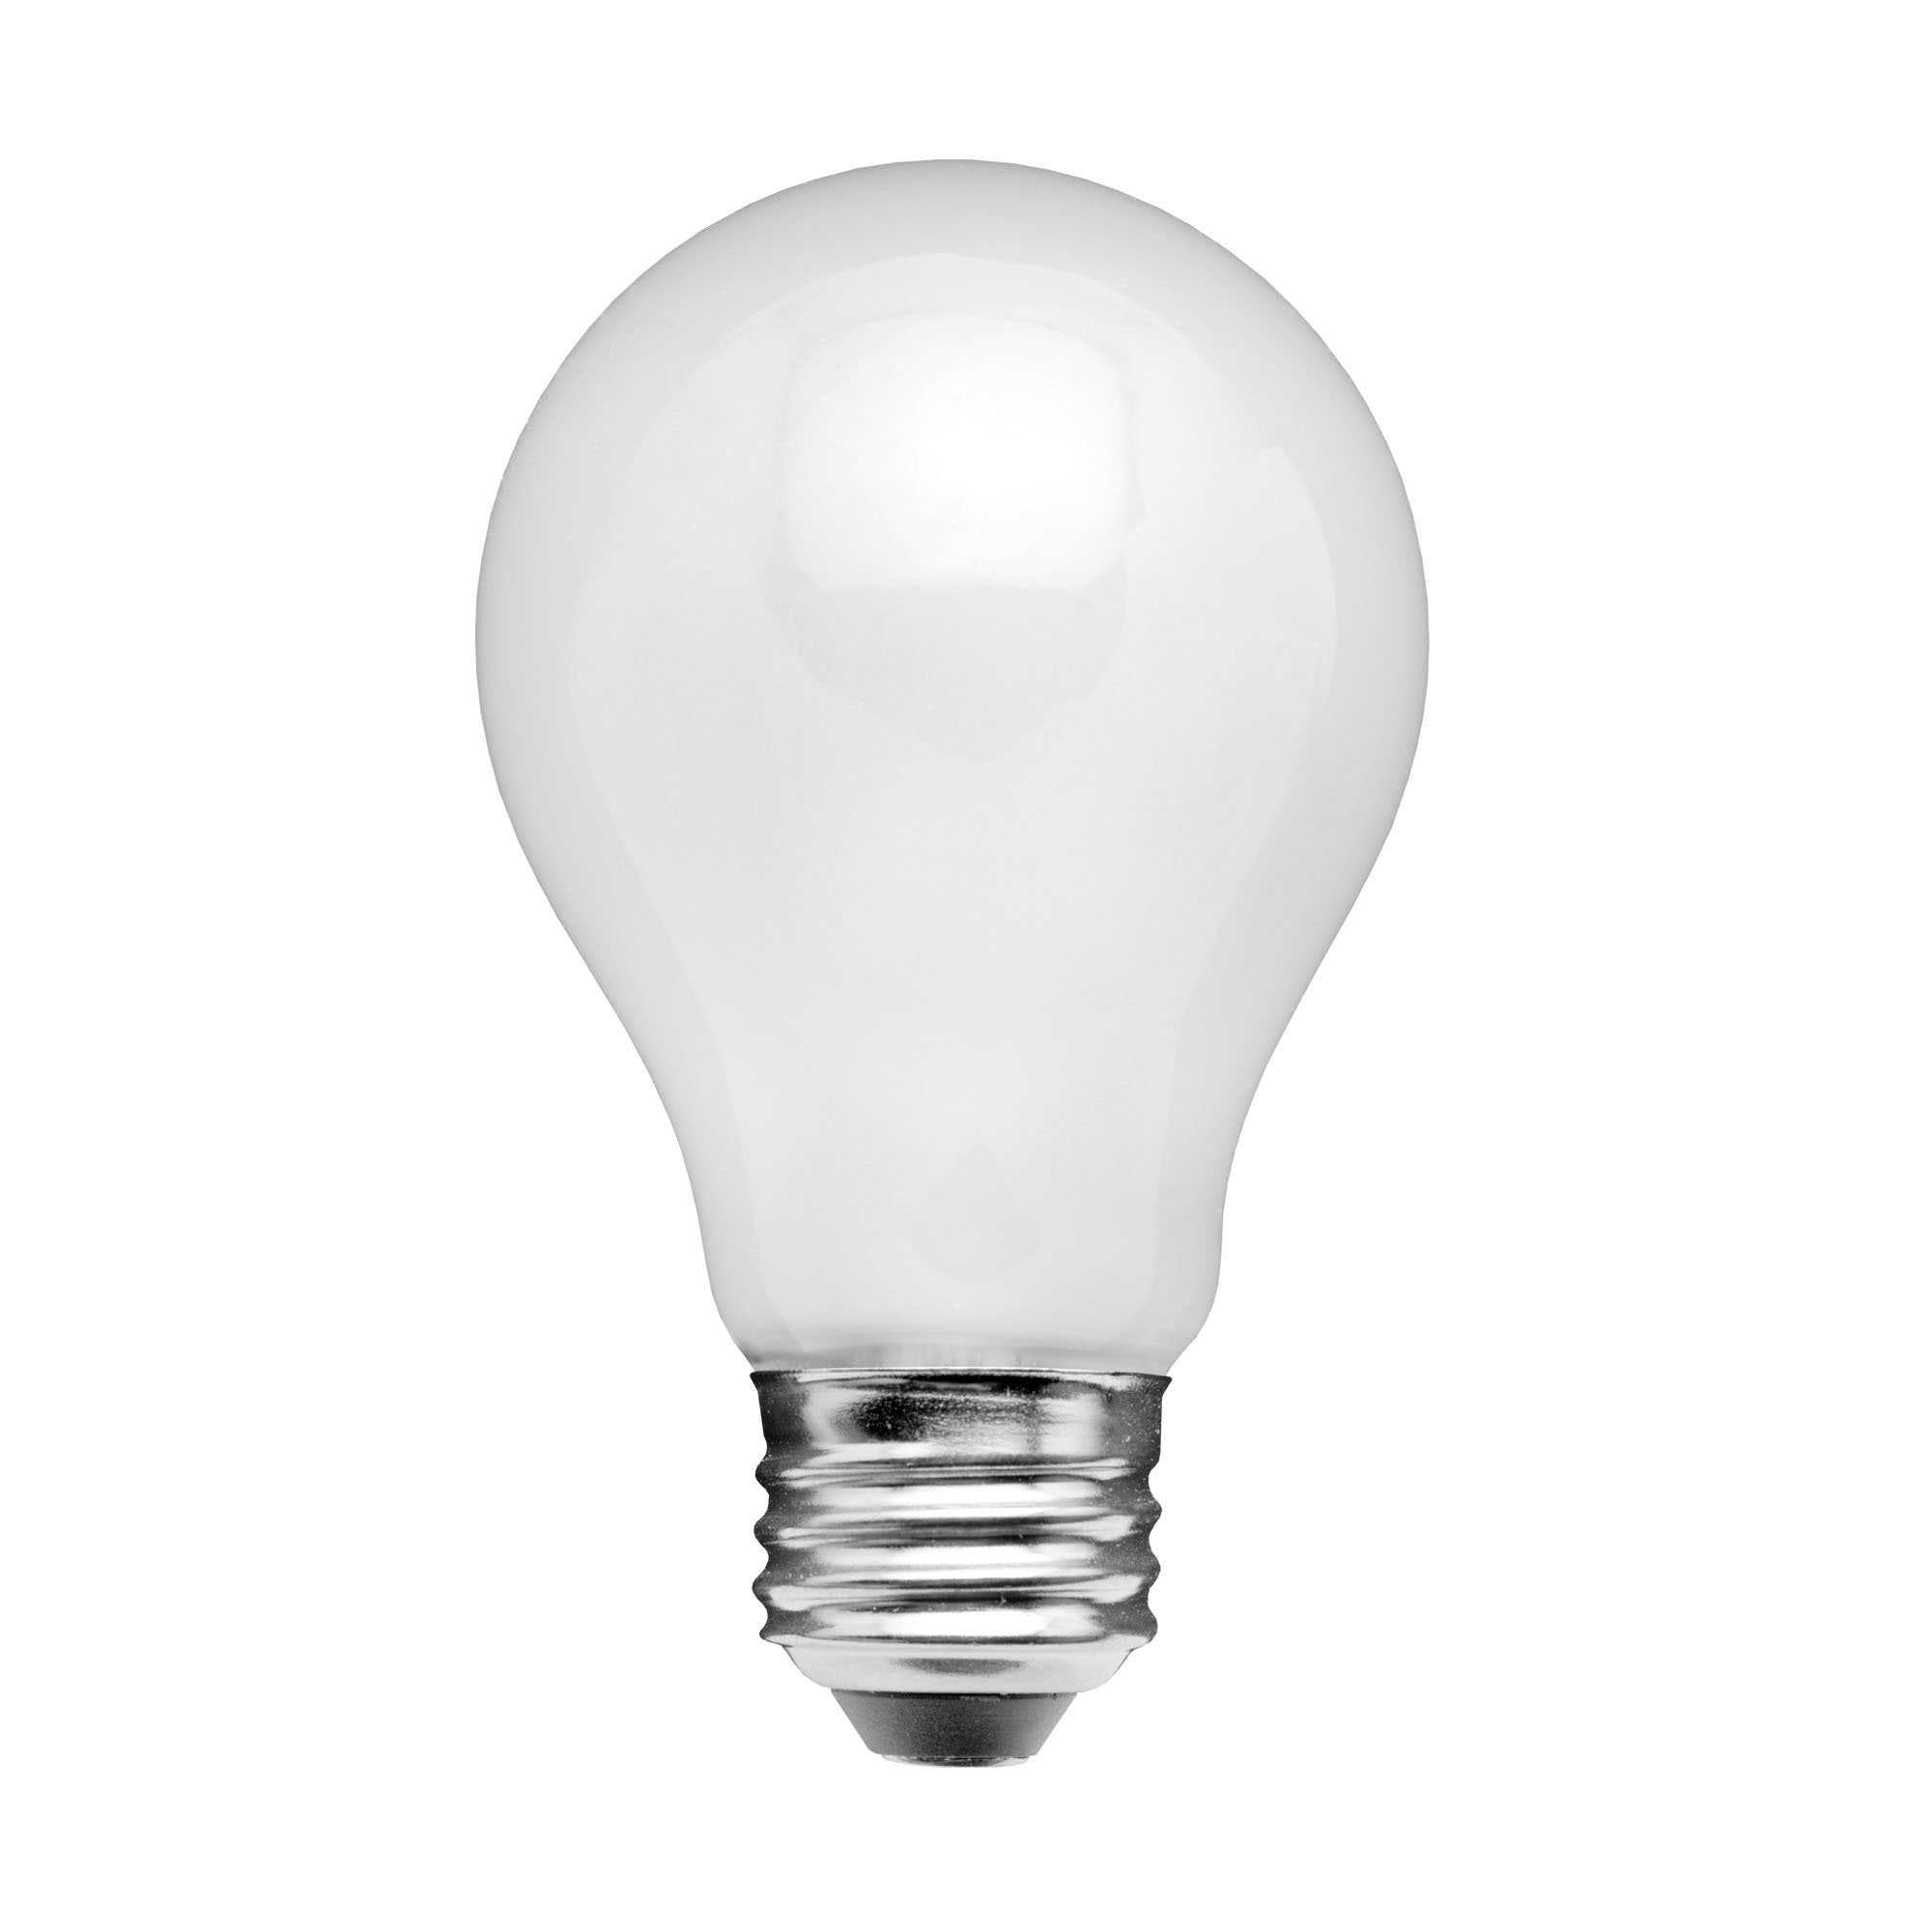 Buy Dreamlux® 9 WATT DOB (Direct On Board) White Color LED Bulb